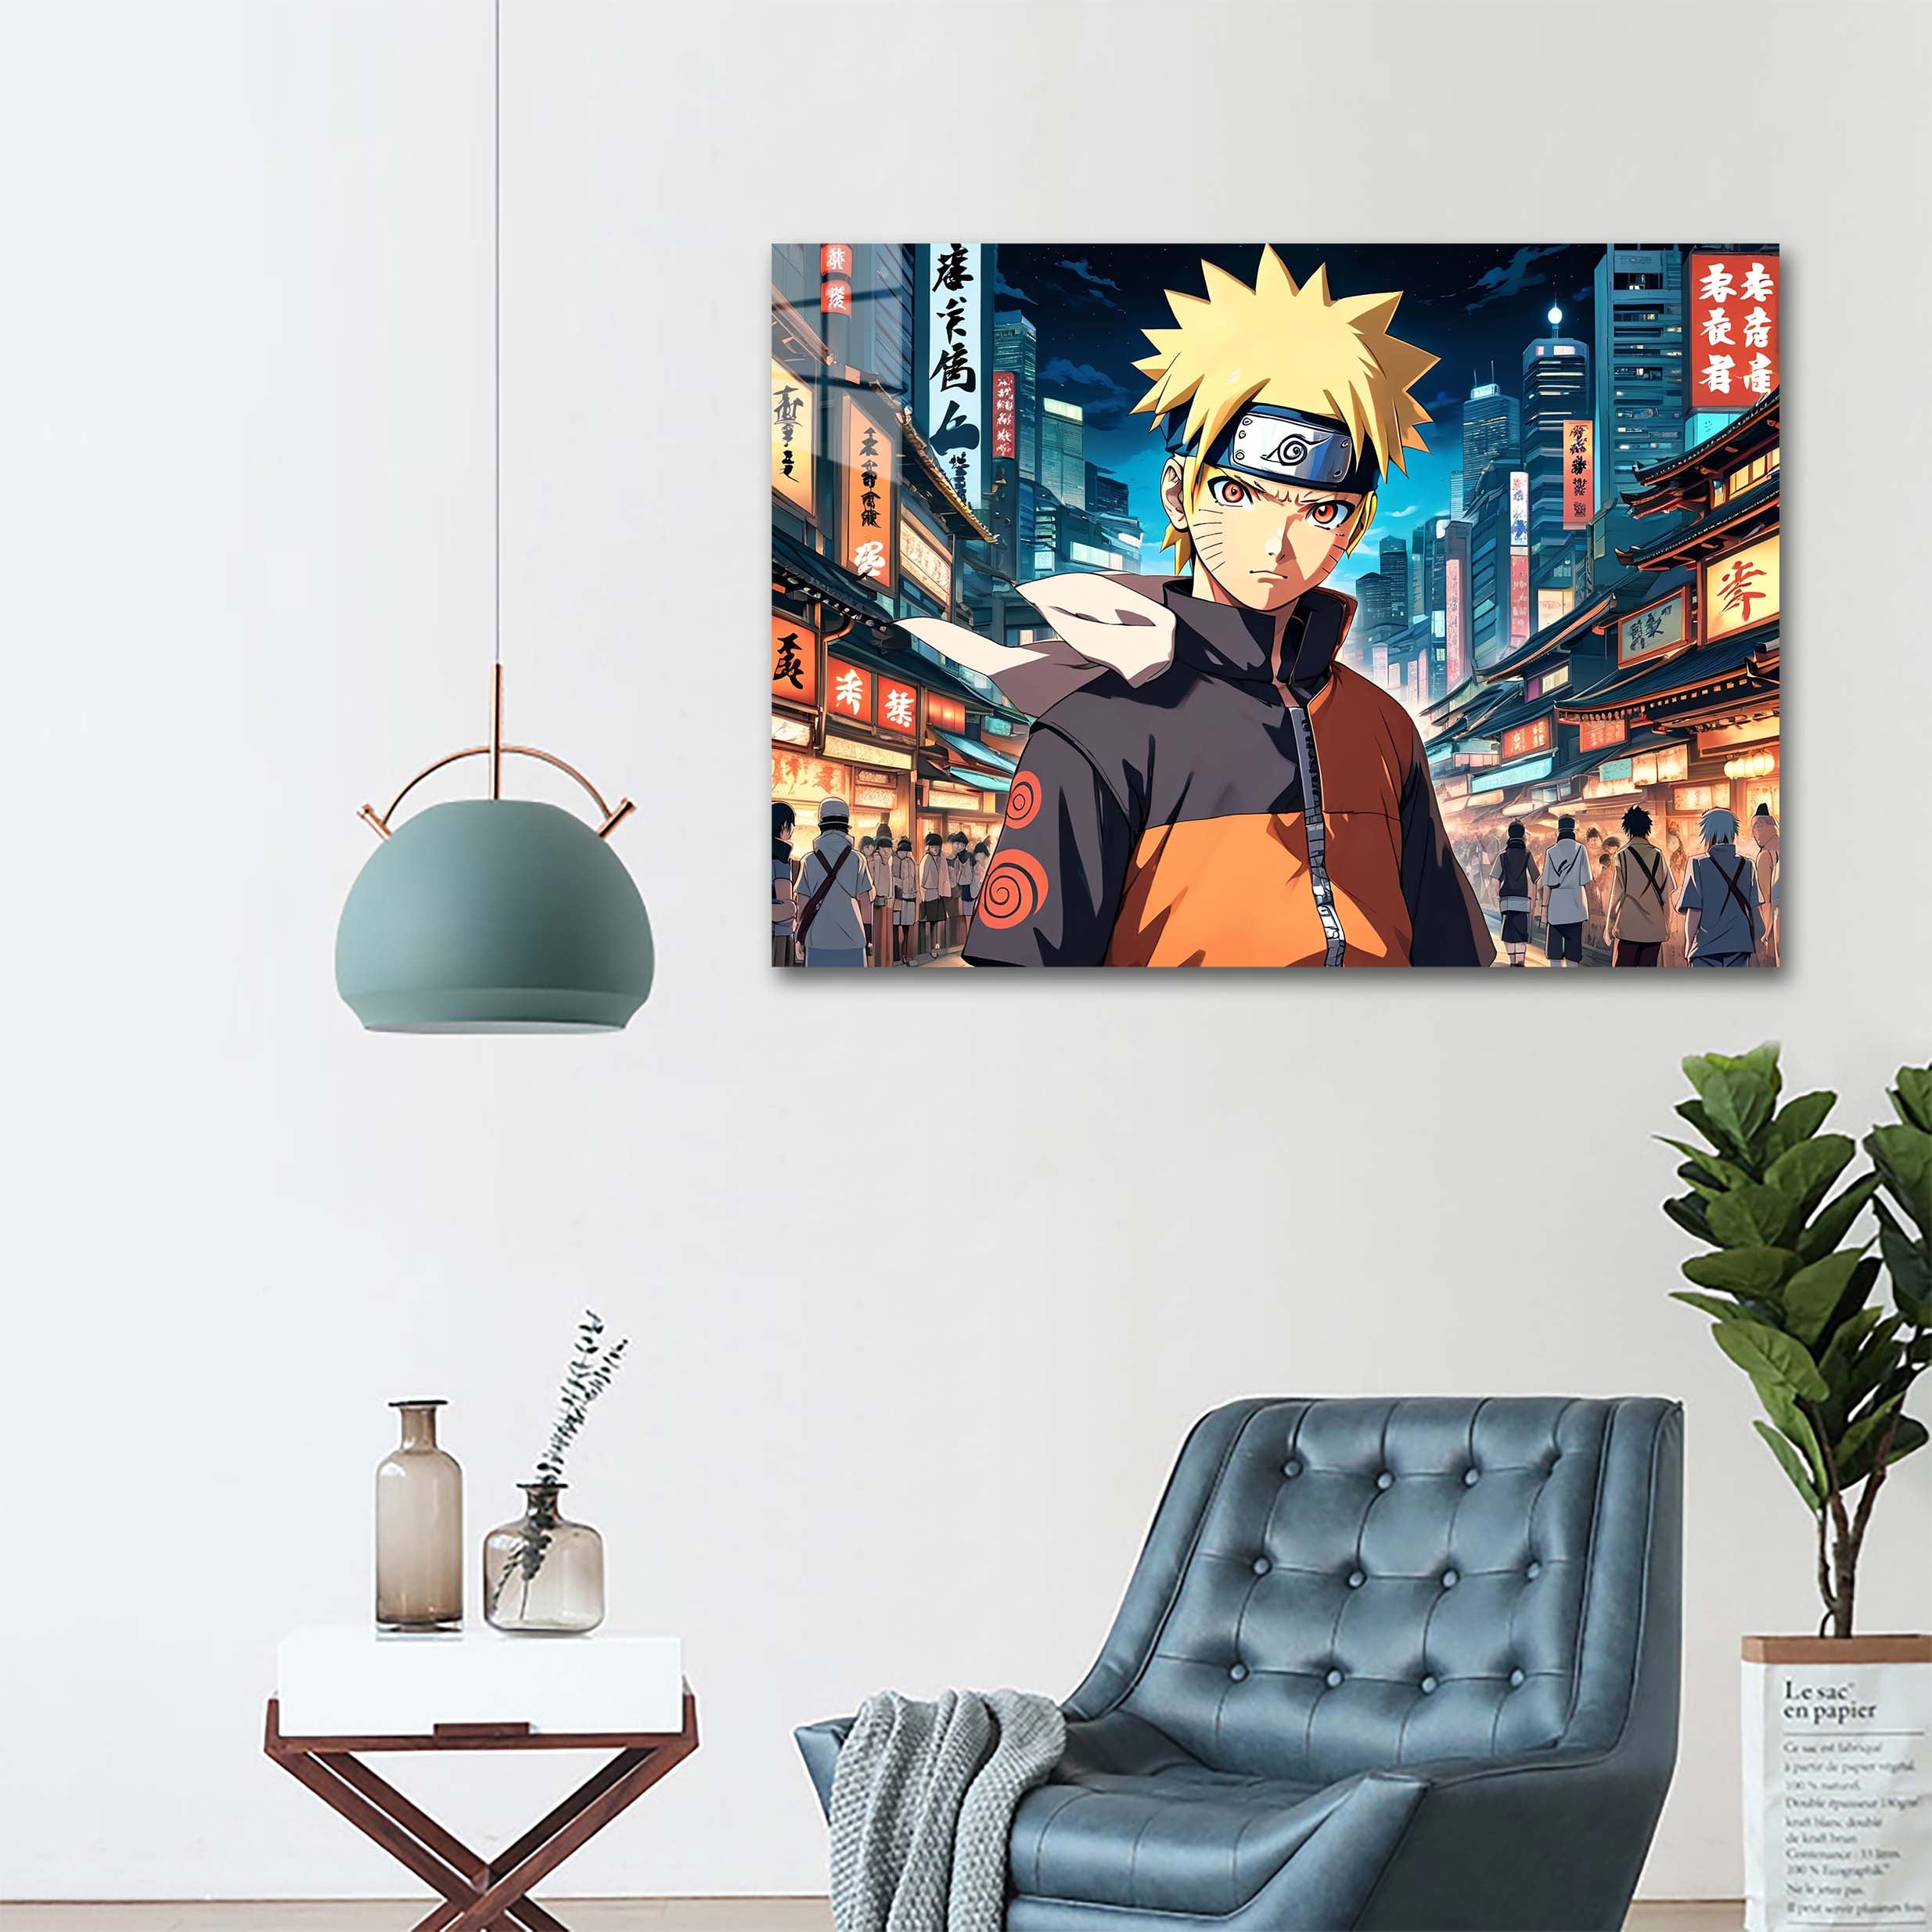 Naruto_5-designed by @ Jikuanime